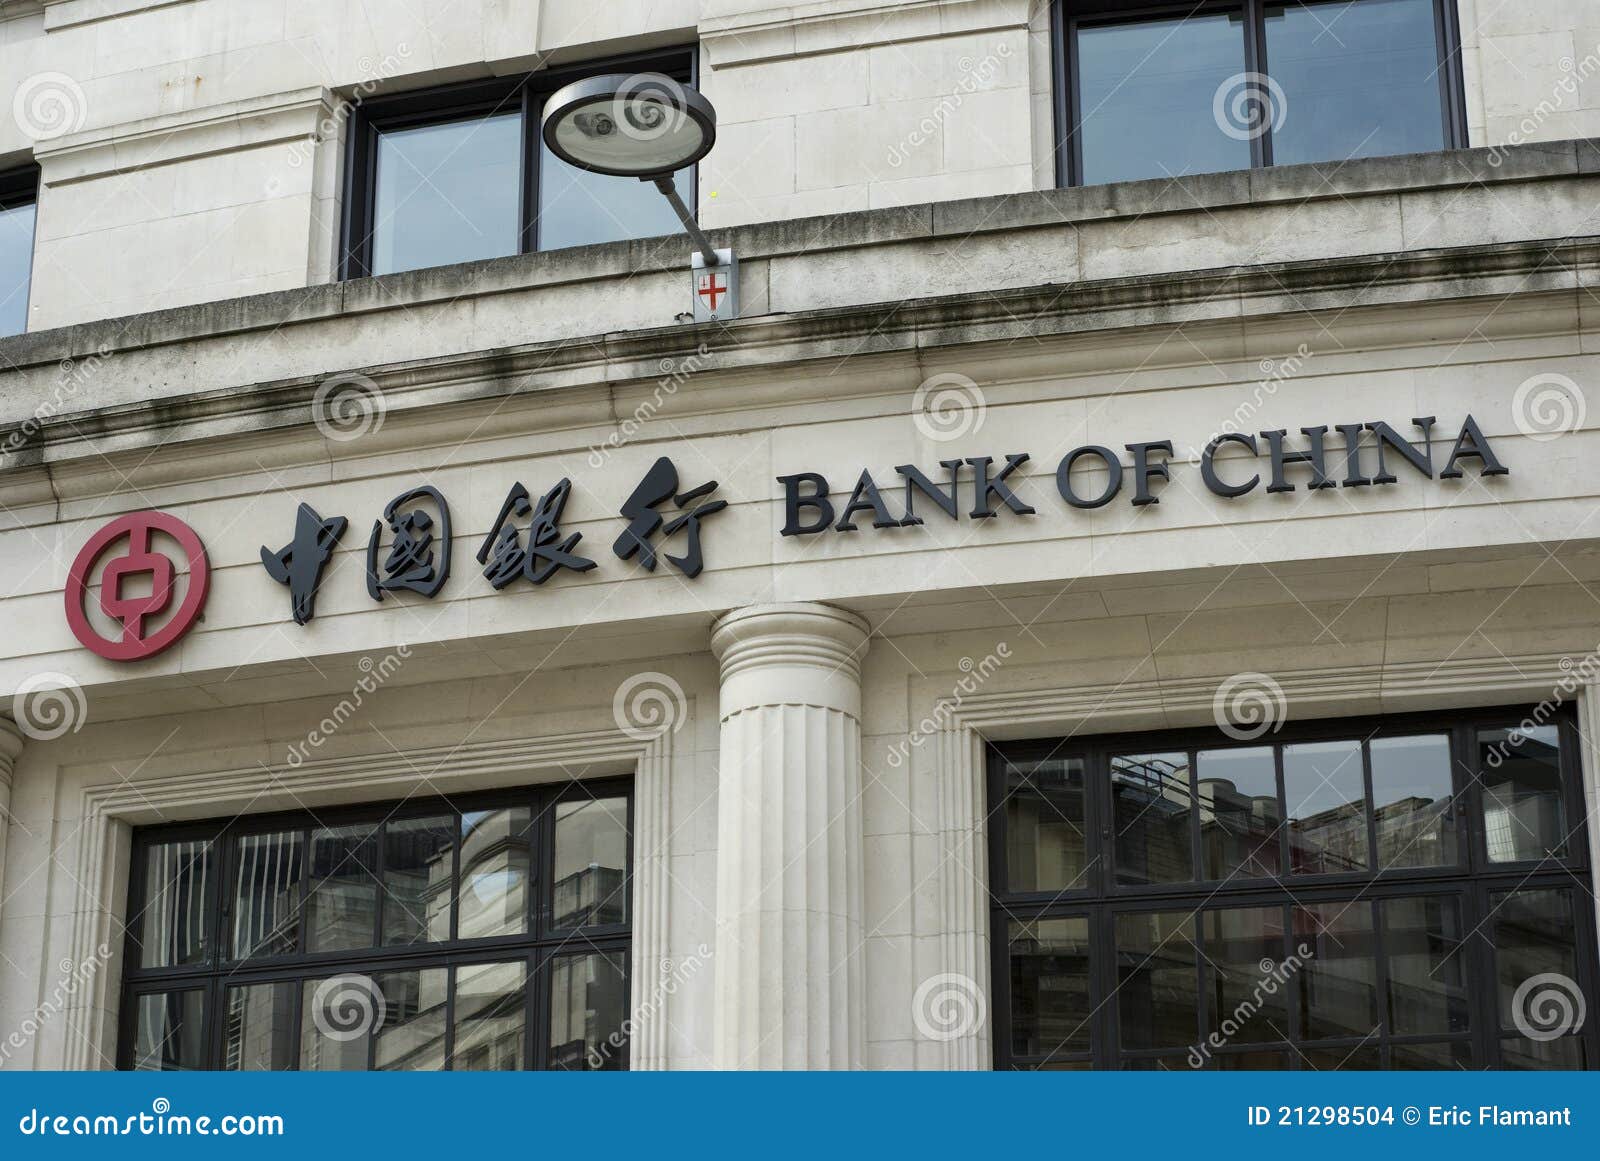 Bank Of China Editorial Stock Image - Image: 21298504